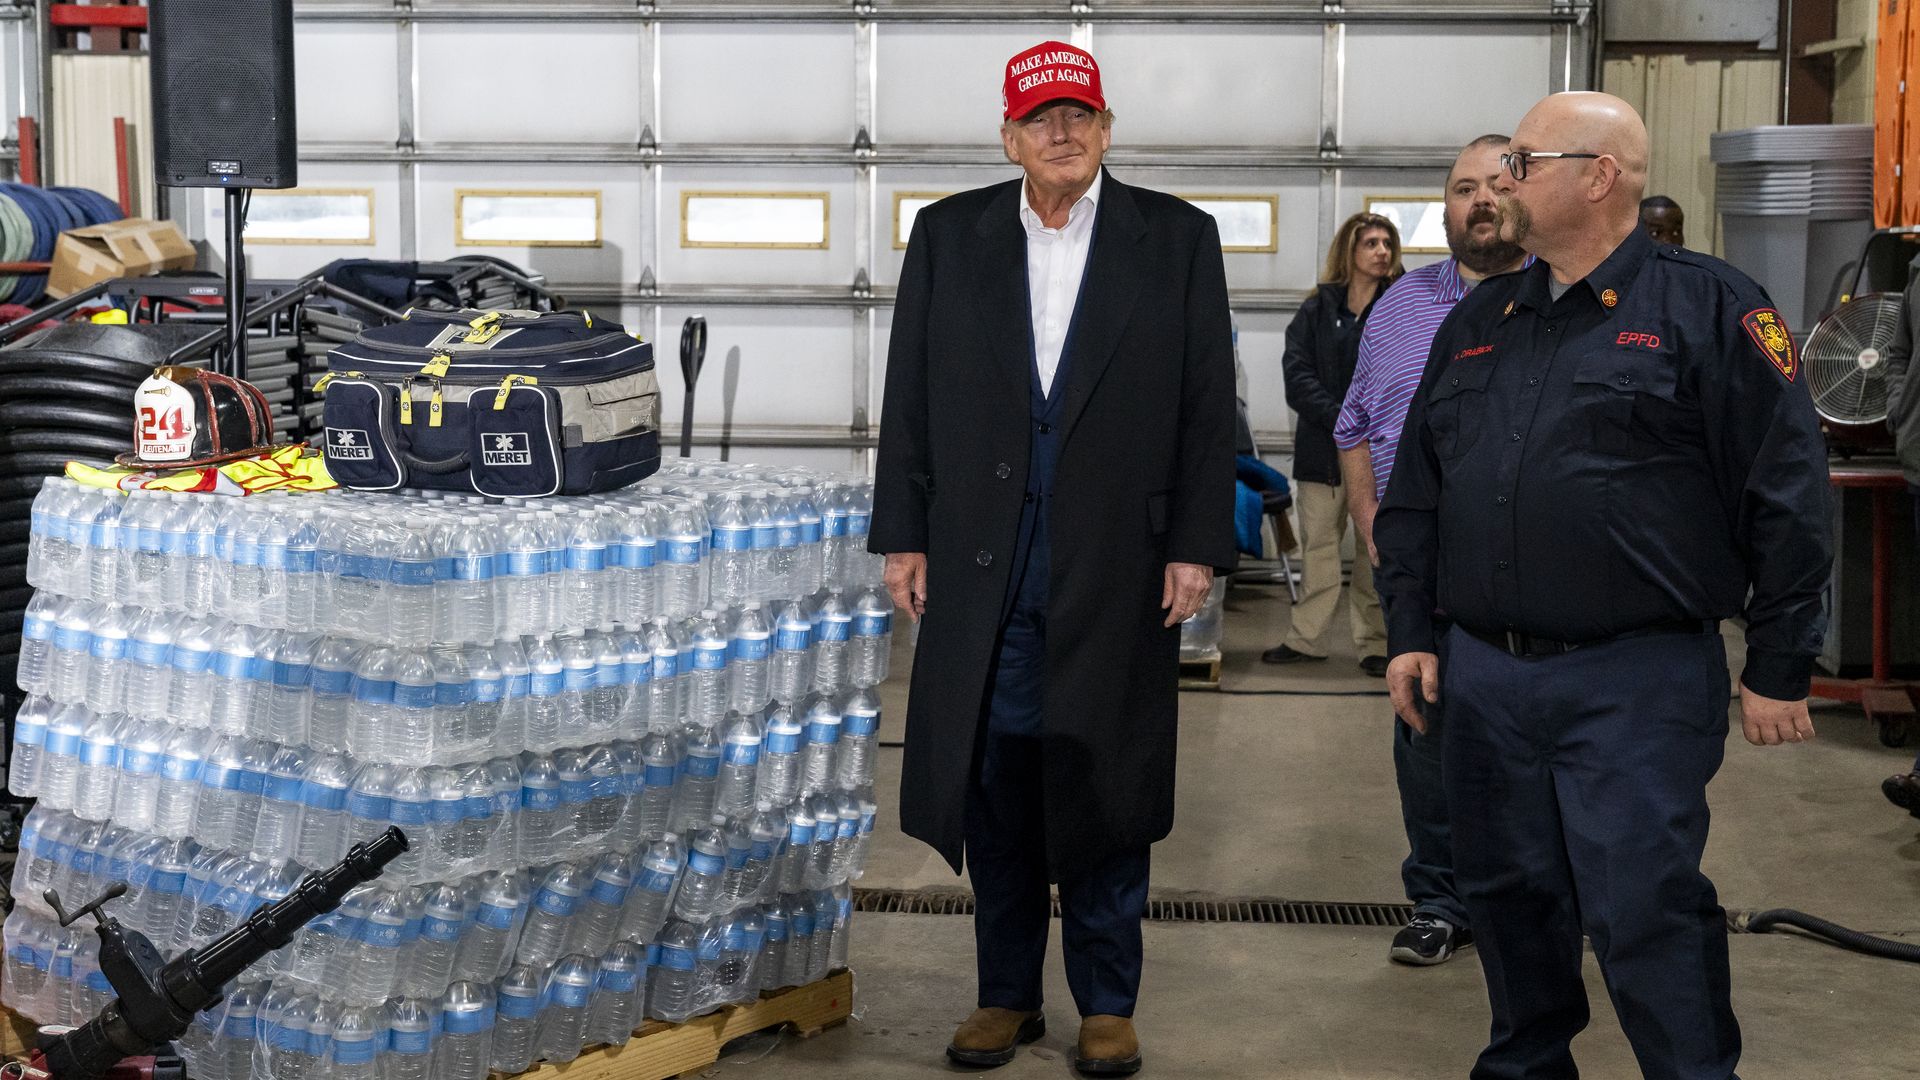 Trump with racks of bottles of water